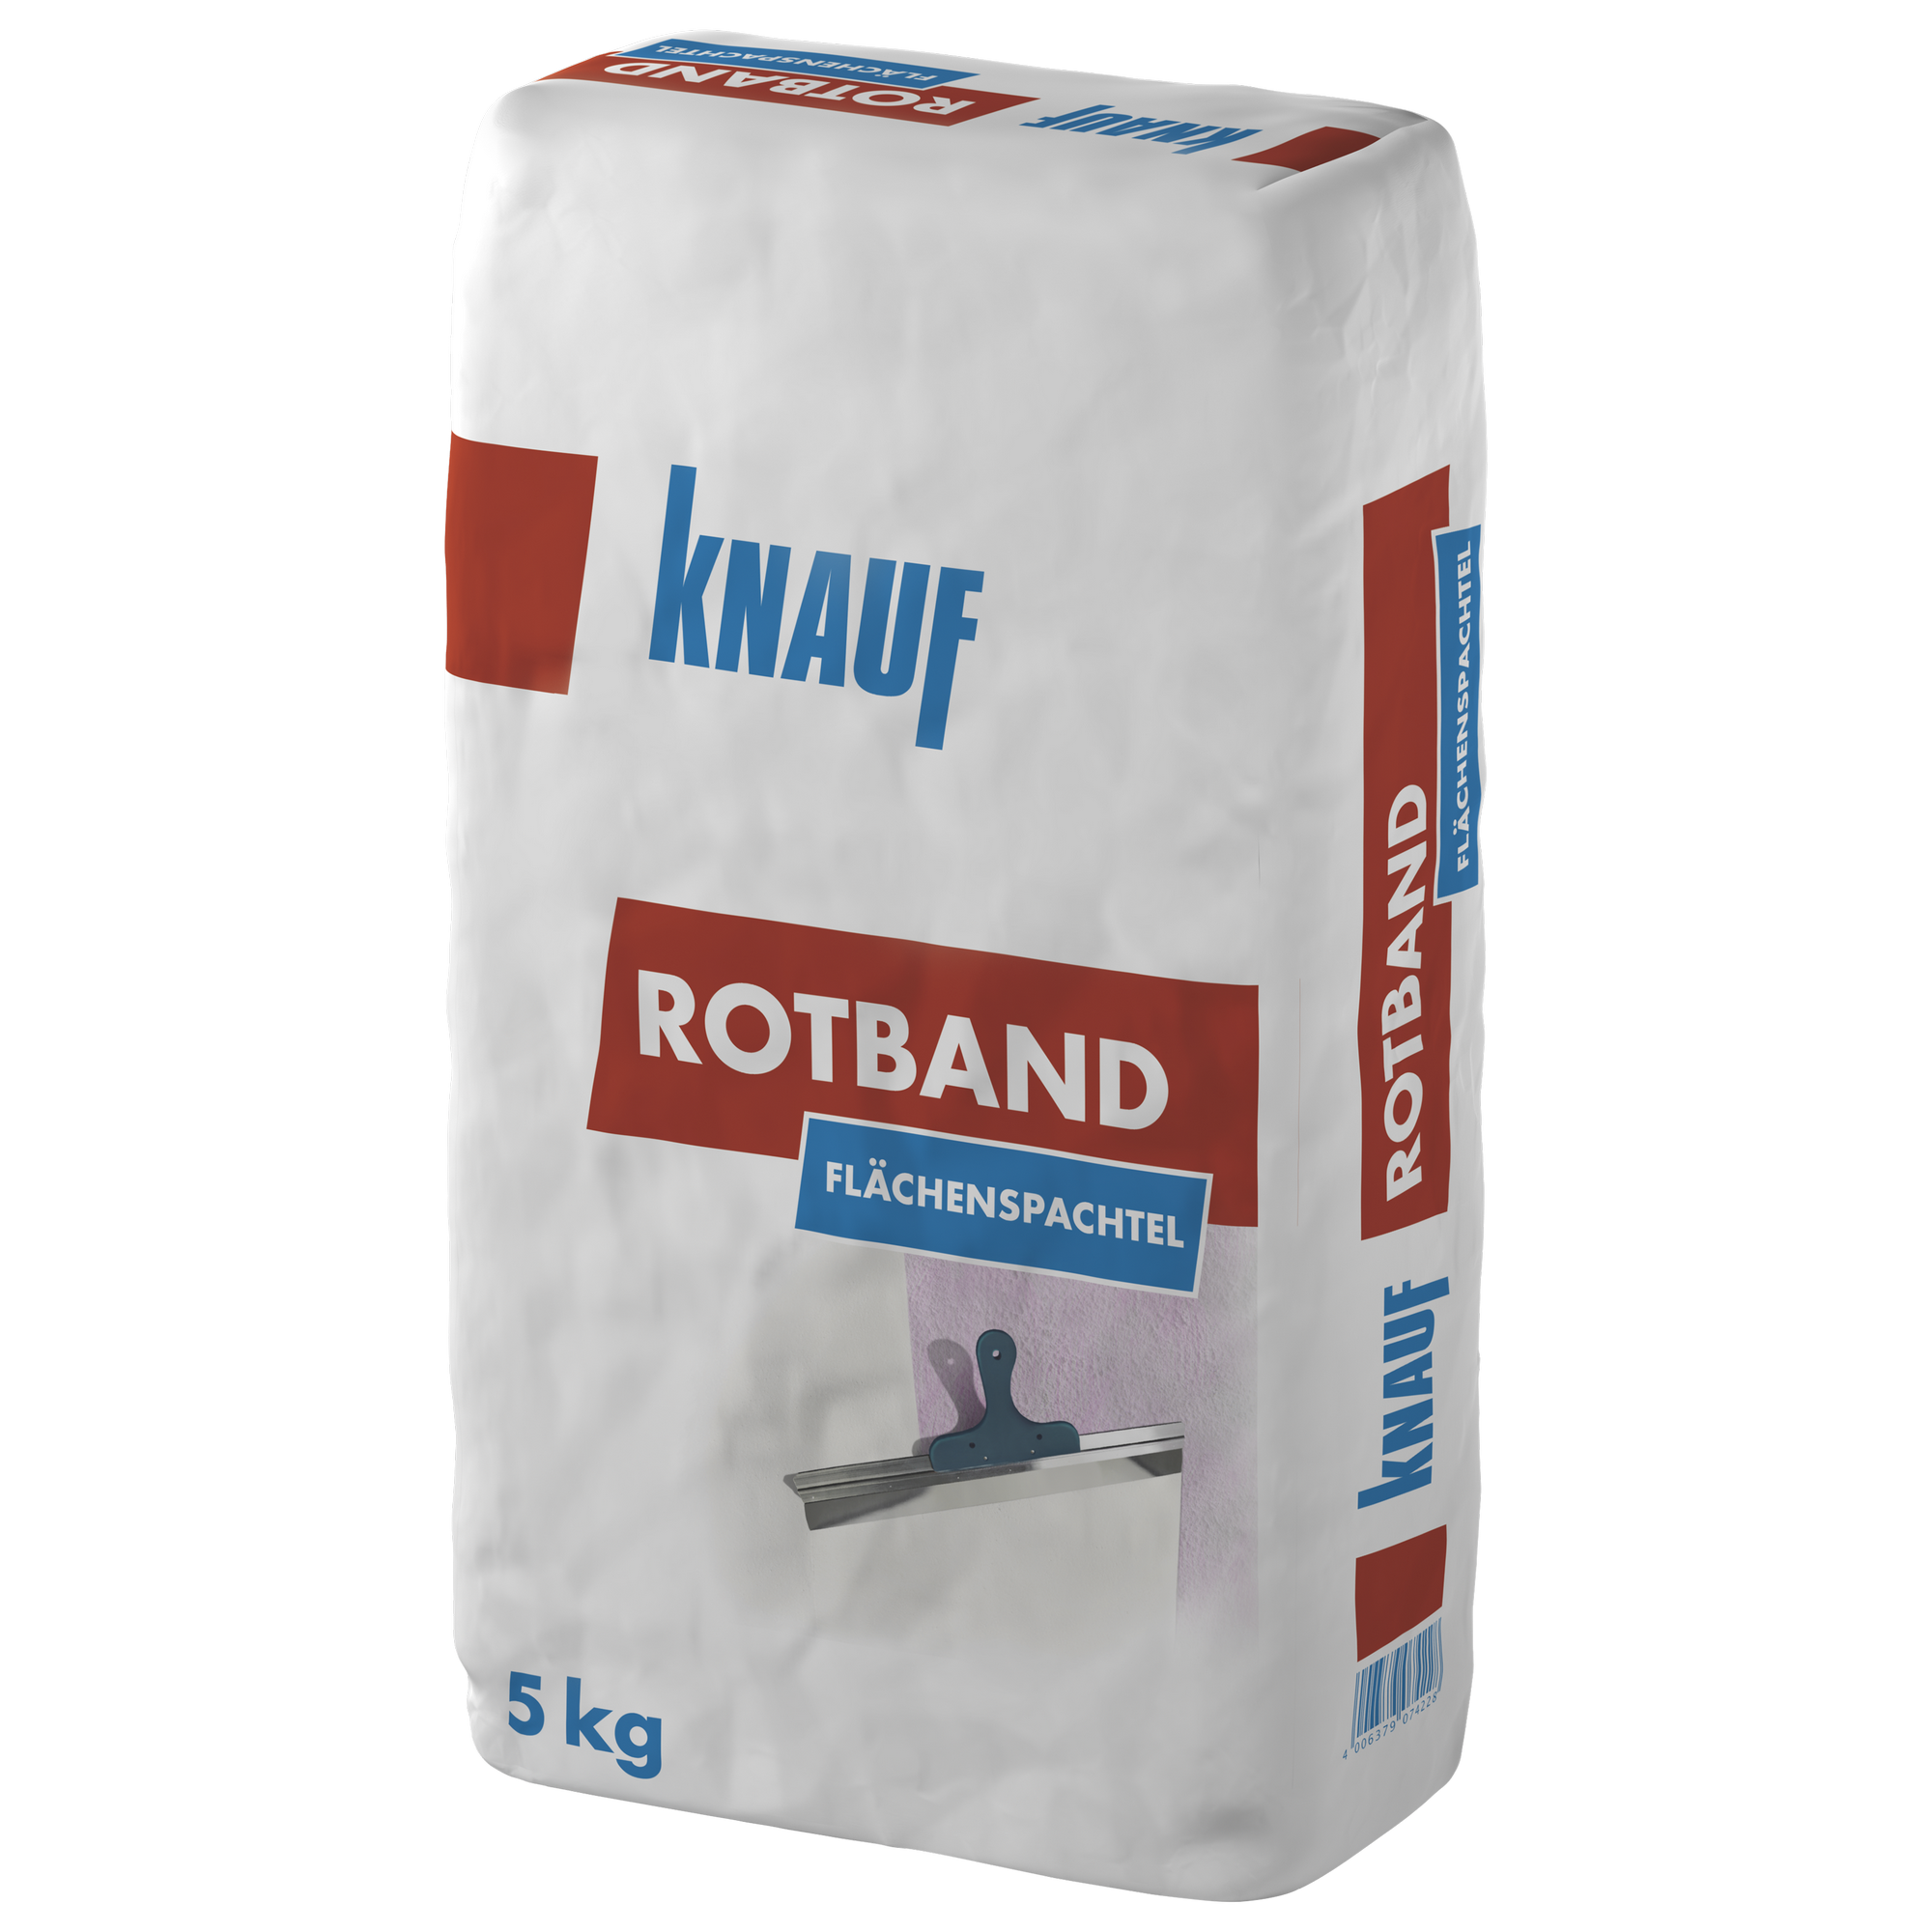 Flächenspachtel 'Rotband' 5 kg + product picture